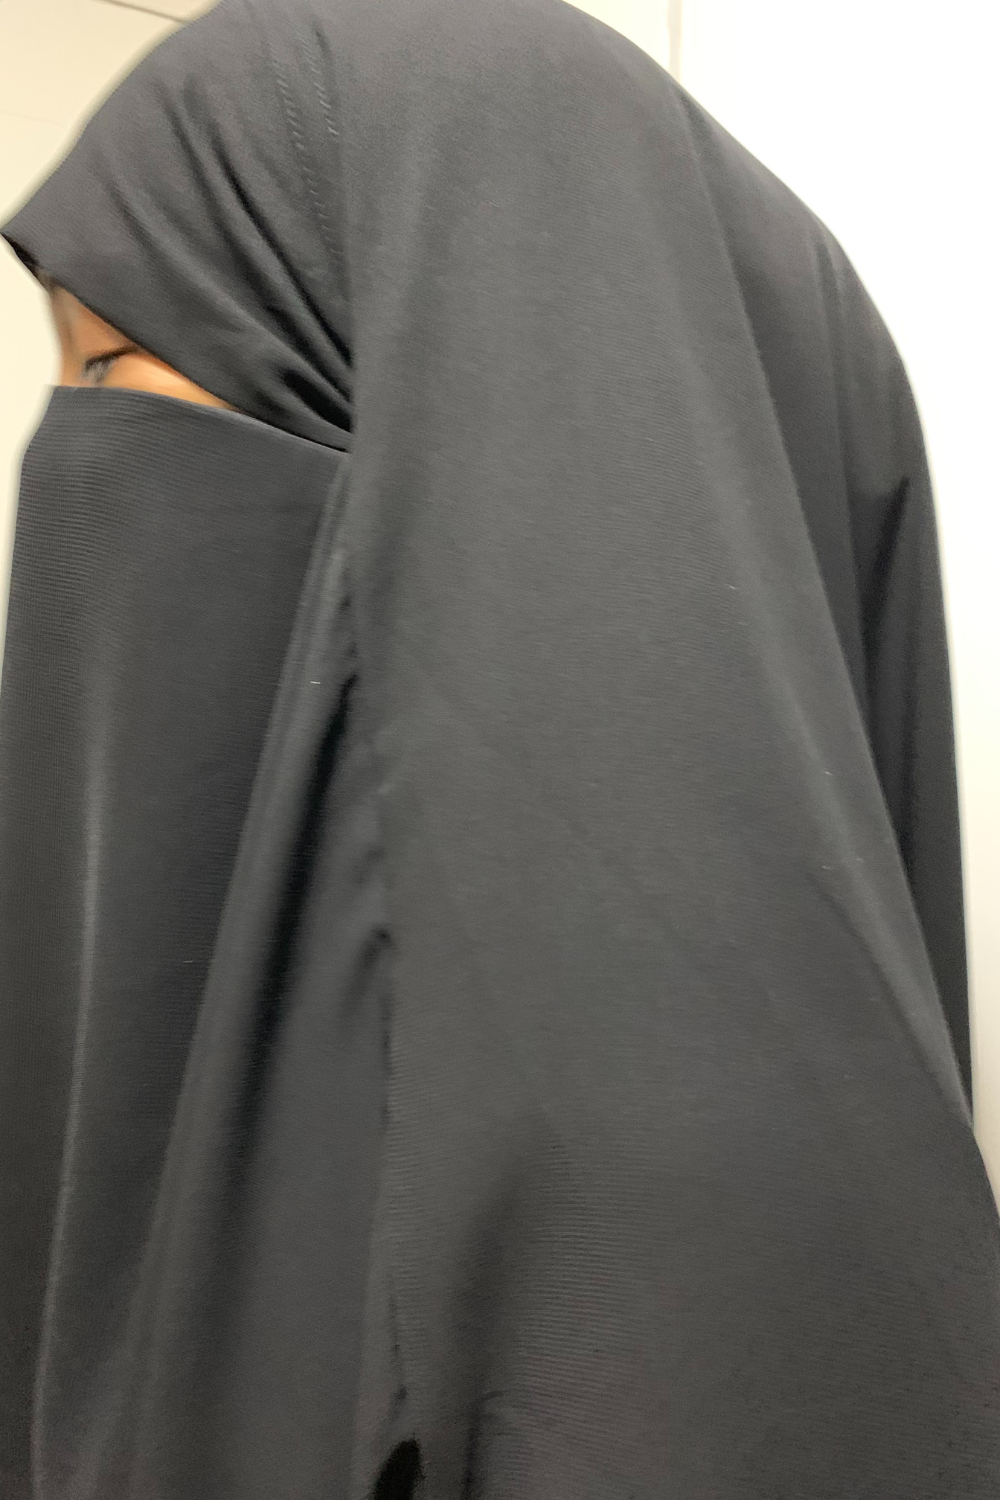 khimar niqab in black